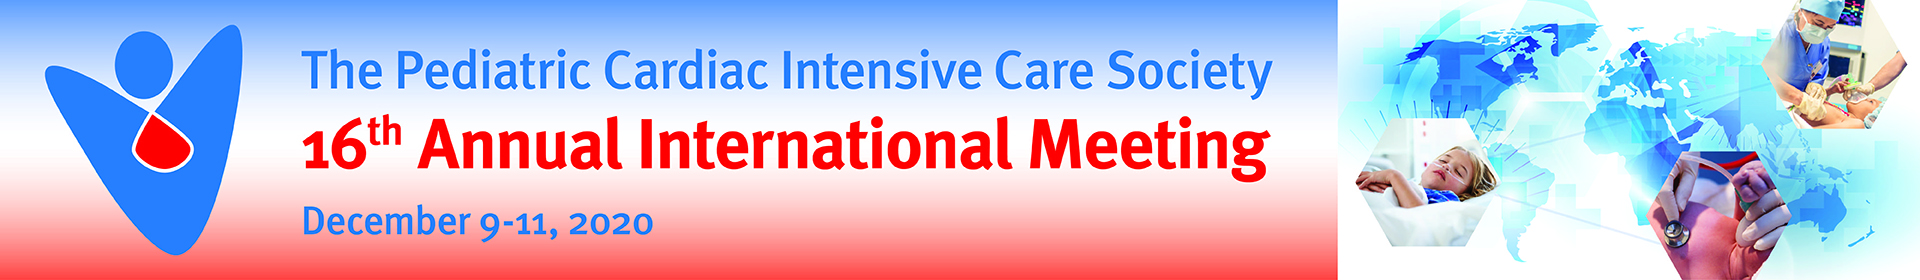 Pediatric Cardiac Intensive Care Society's Annual International Meeting Event Banner